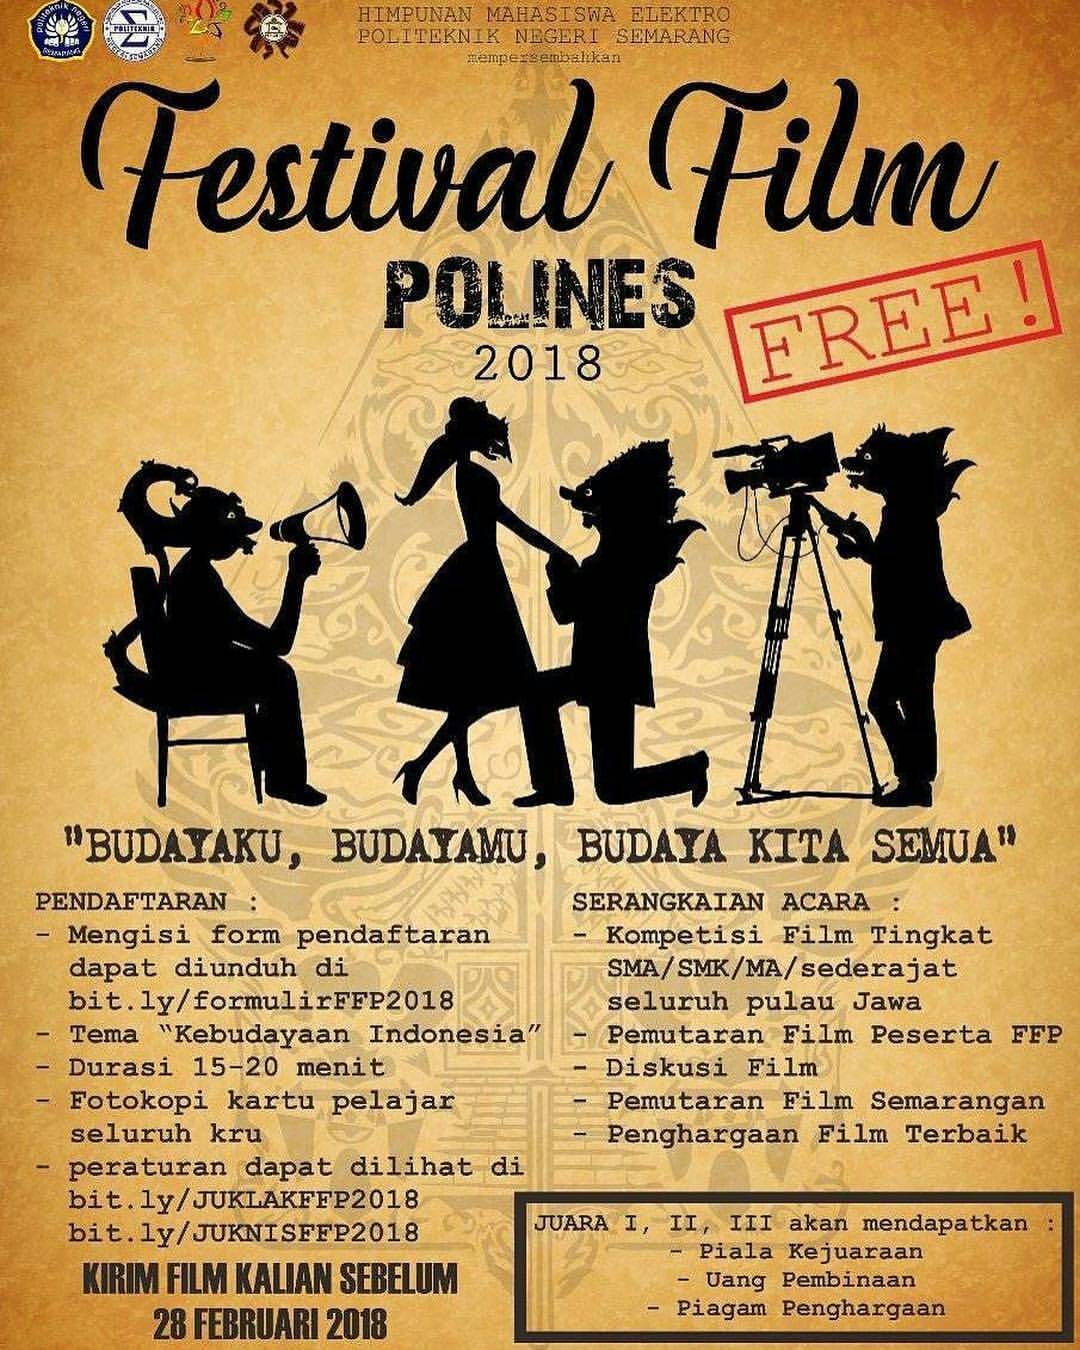 EVENT FESTIVAL FILM POLINES 2018 